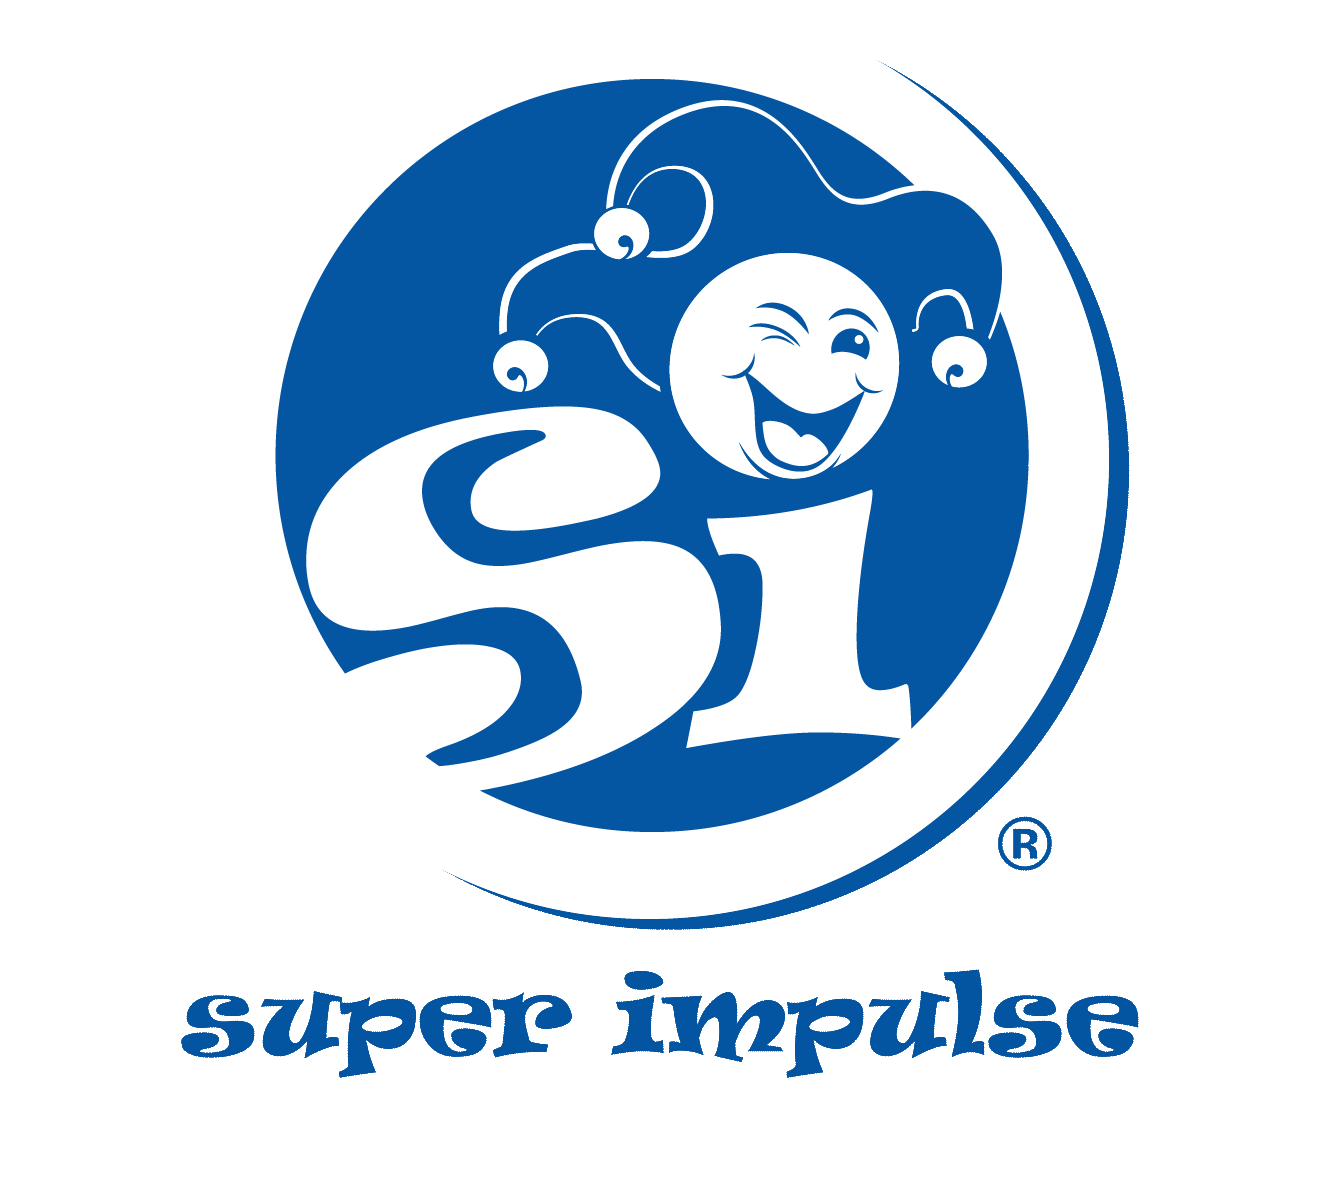 Original Pet Rock by Super impulse